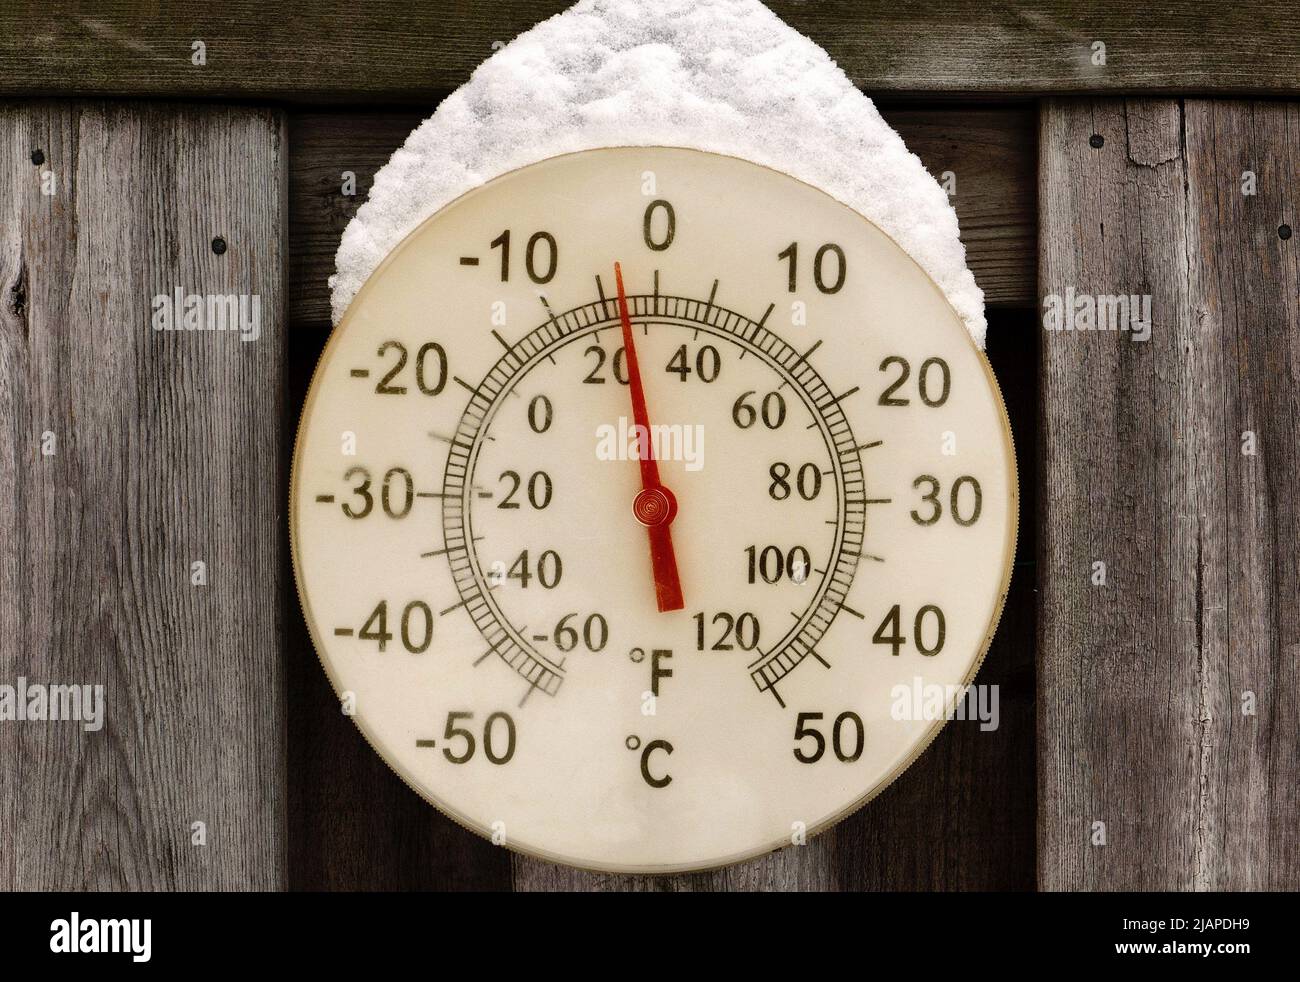 https://c8.alamy.com/comp/2JAPDH9/thermometer-showing-mildly-sub-zero-temperature-sub-zero-2JAPDH9.jpg